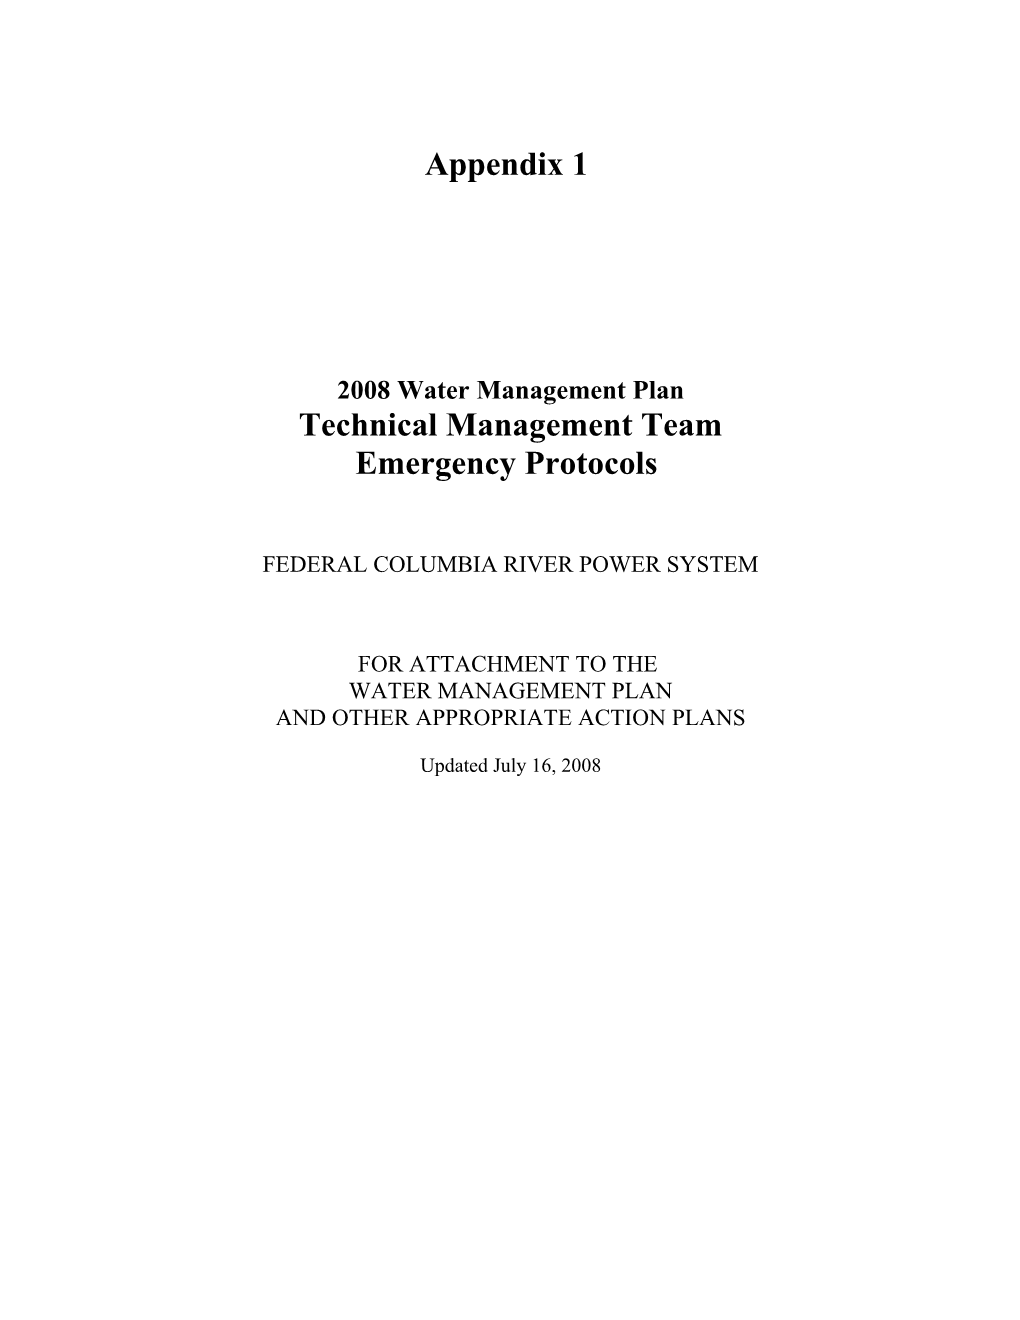 20045 Water Management Plan Appendix 1 Emergency Protocols